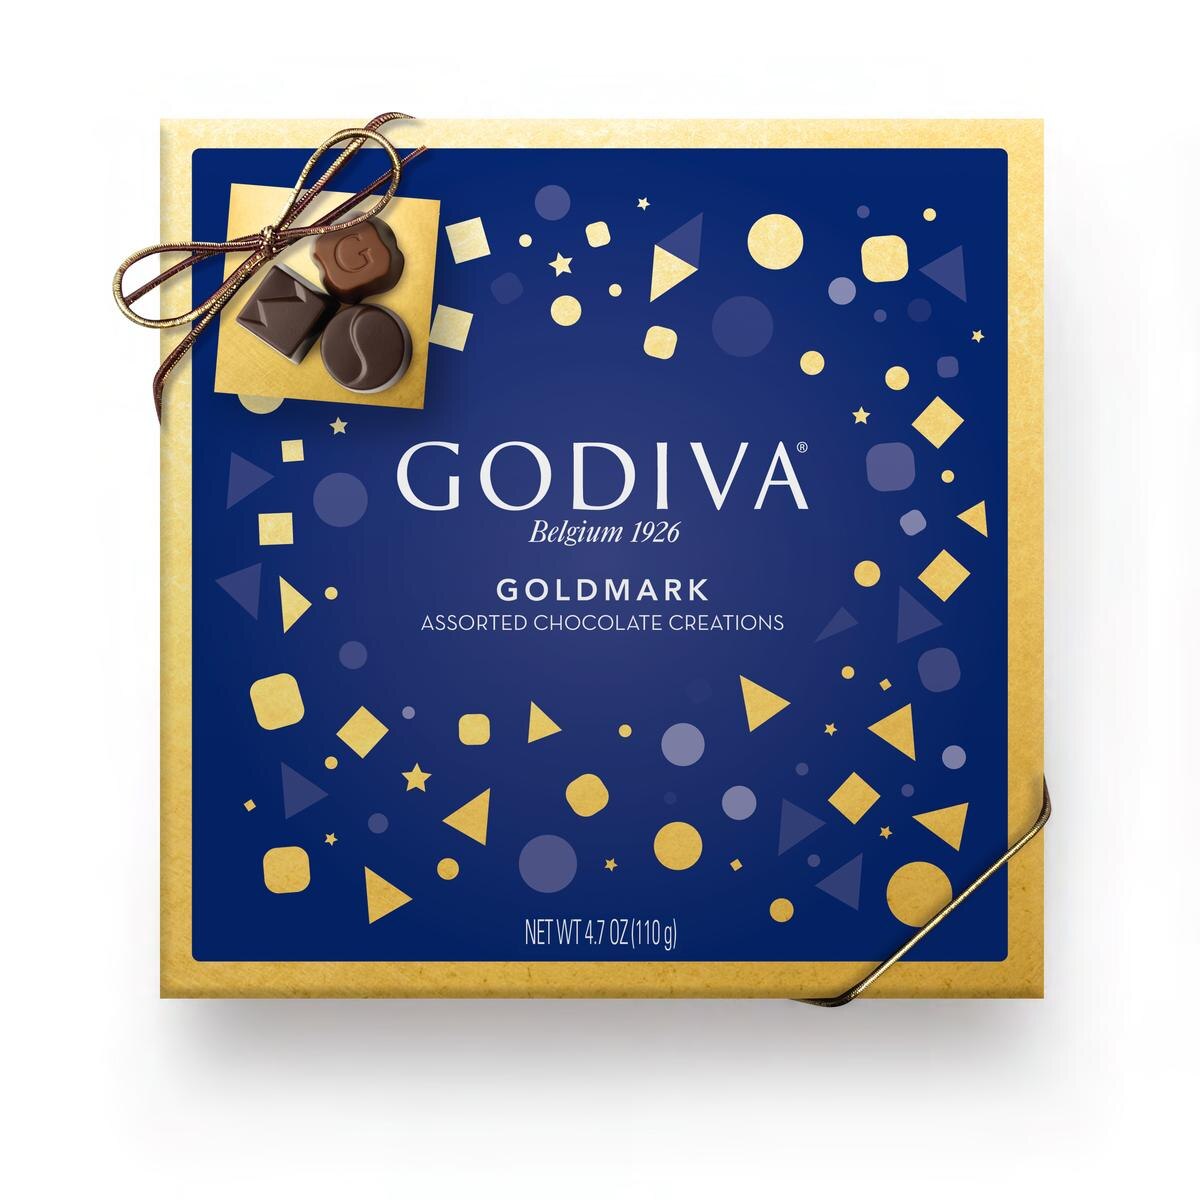 Godiva Goldmark Boxed Assorted Chocolate Creations